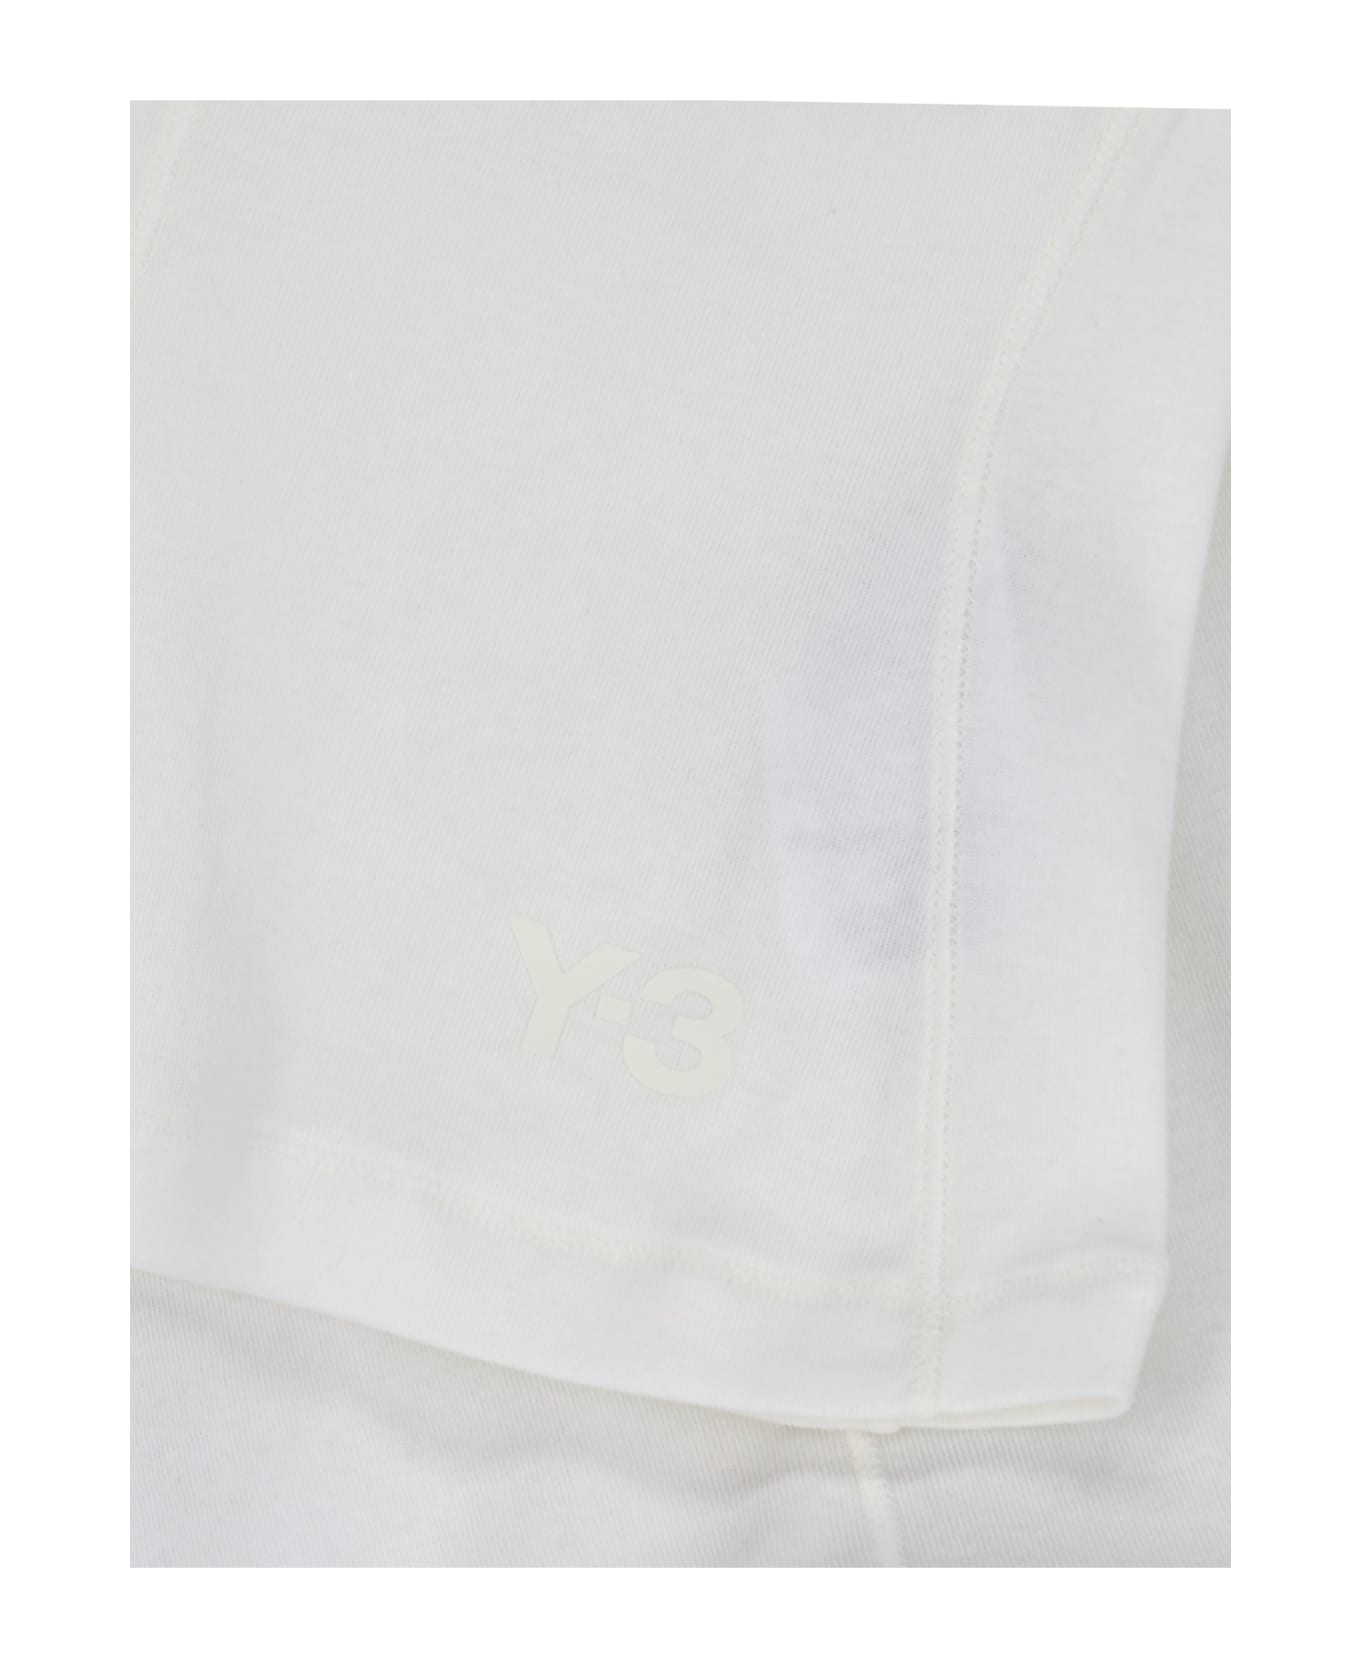 Y-3 Basic T-shirt - OFF WHITE